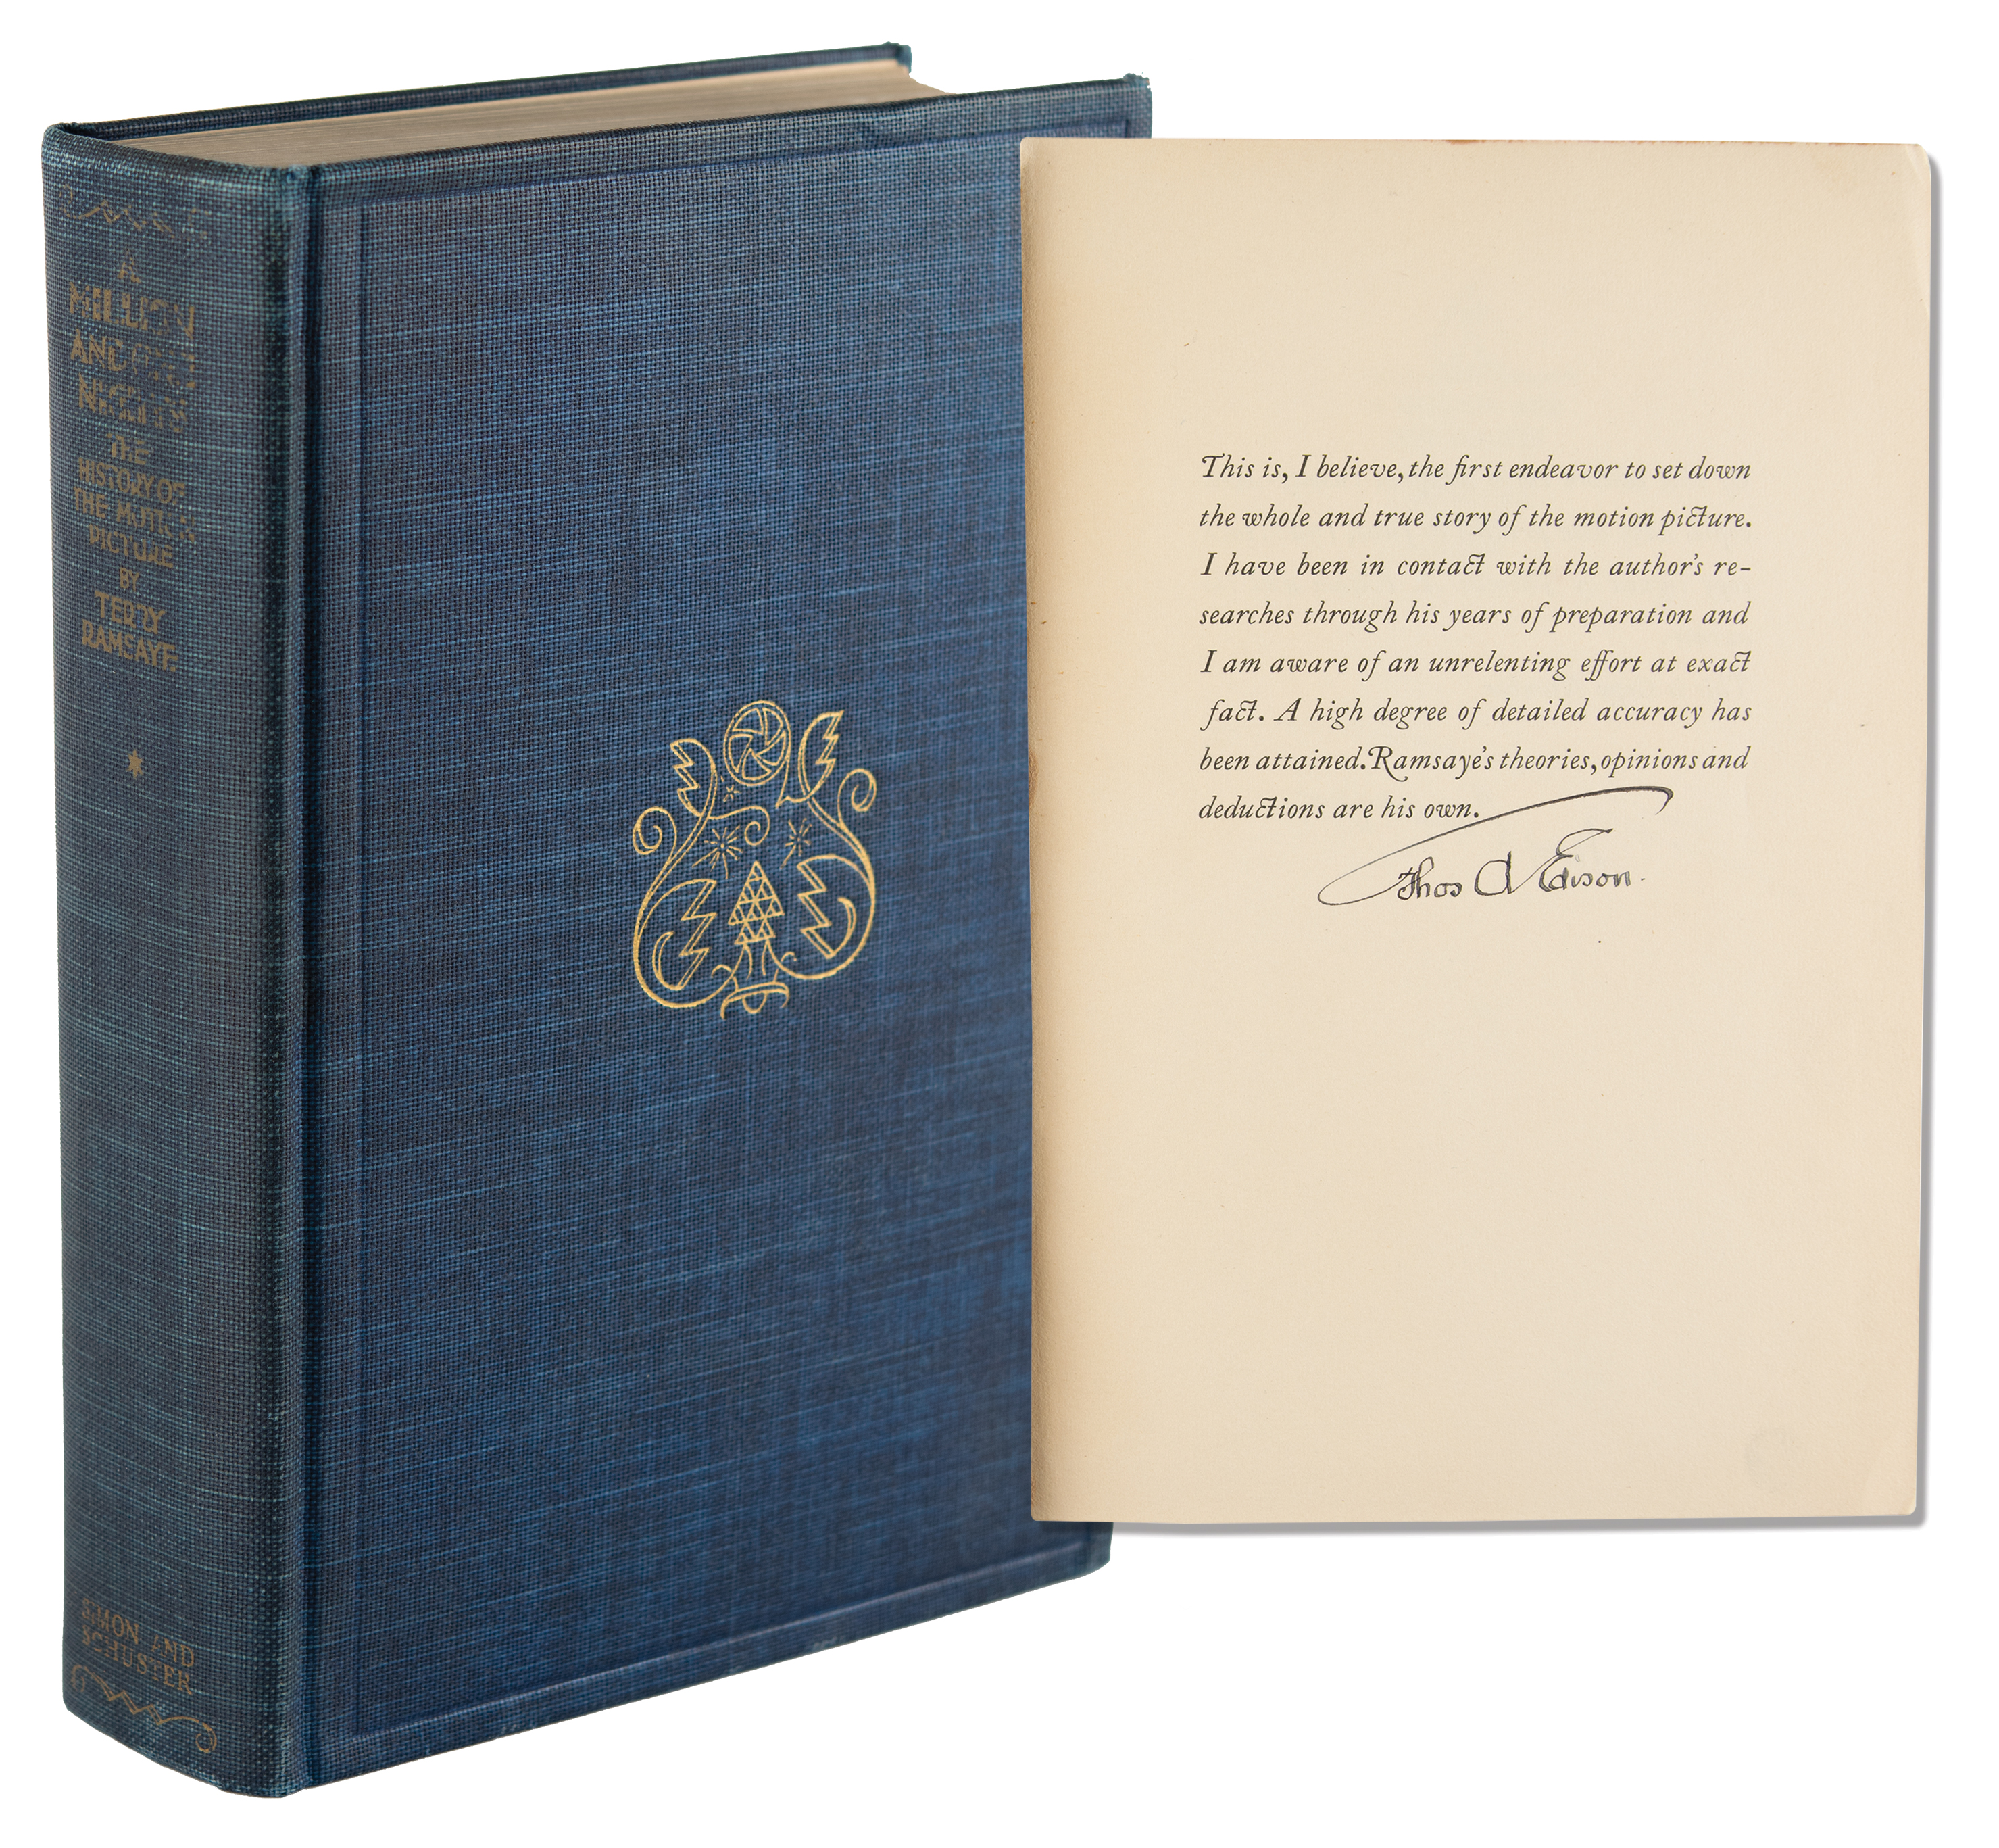 Lot #147 Thomas Edison Signed Limited Edition Book - Image 1